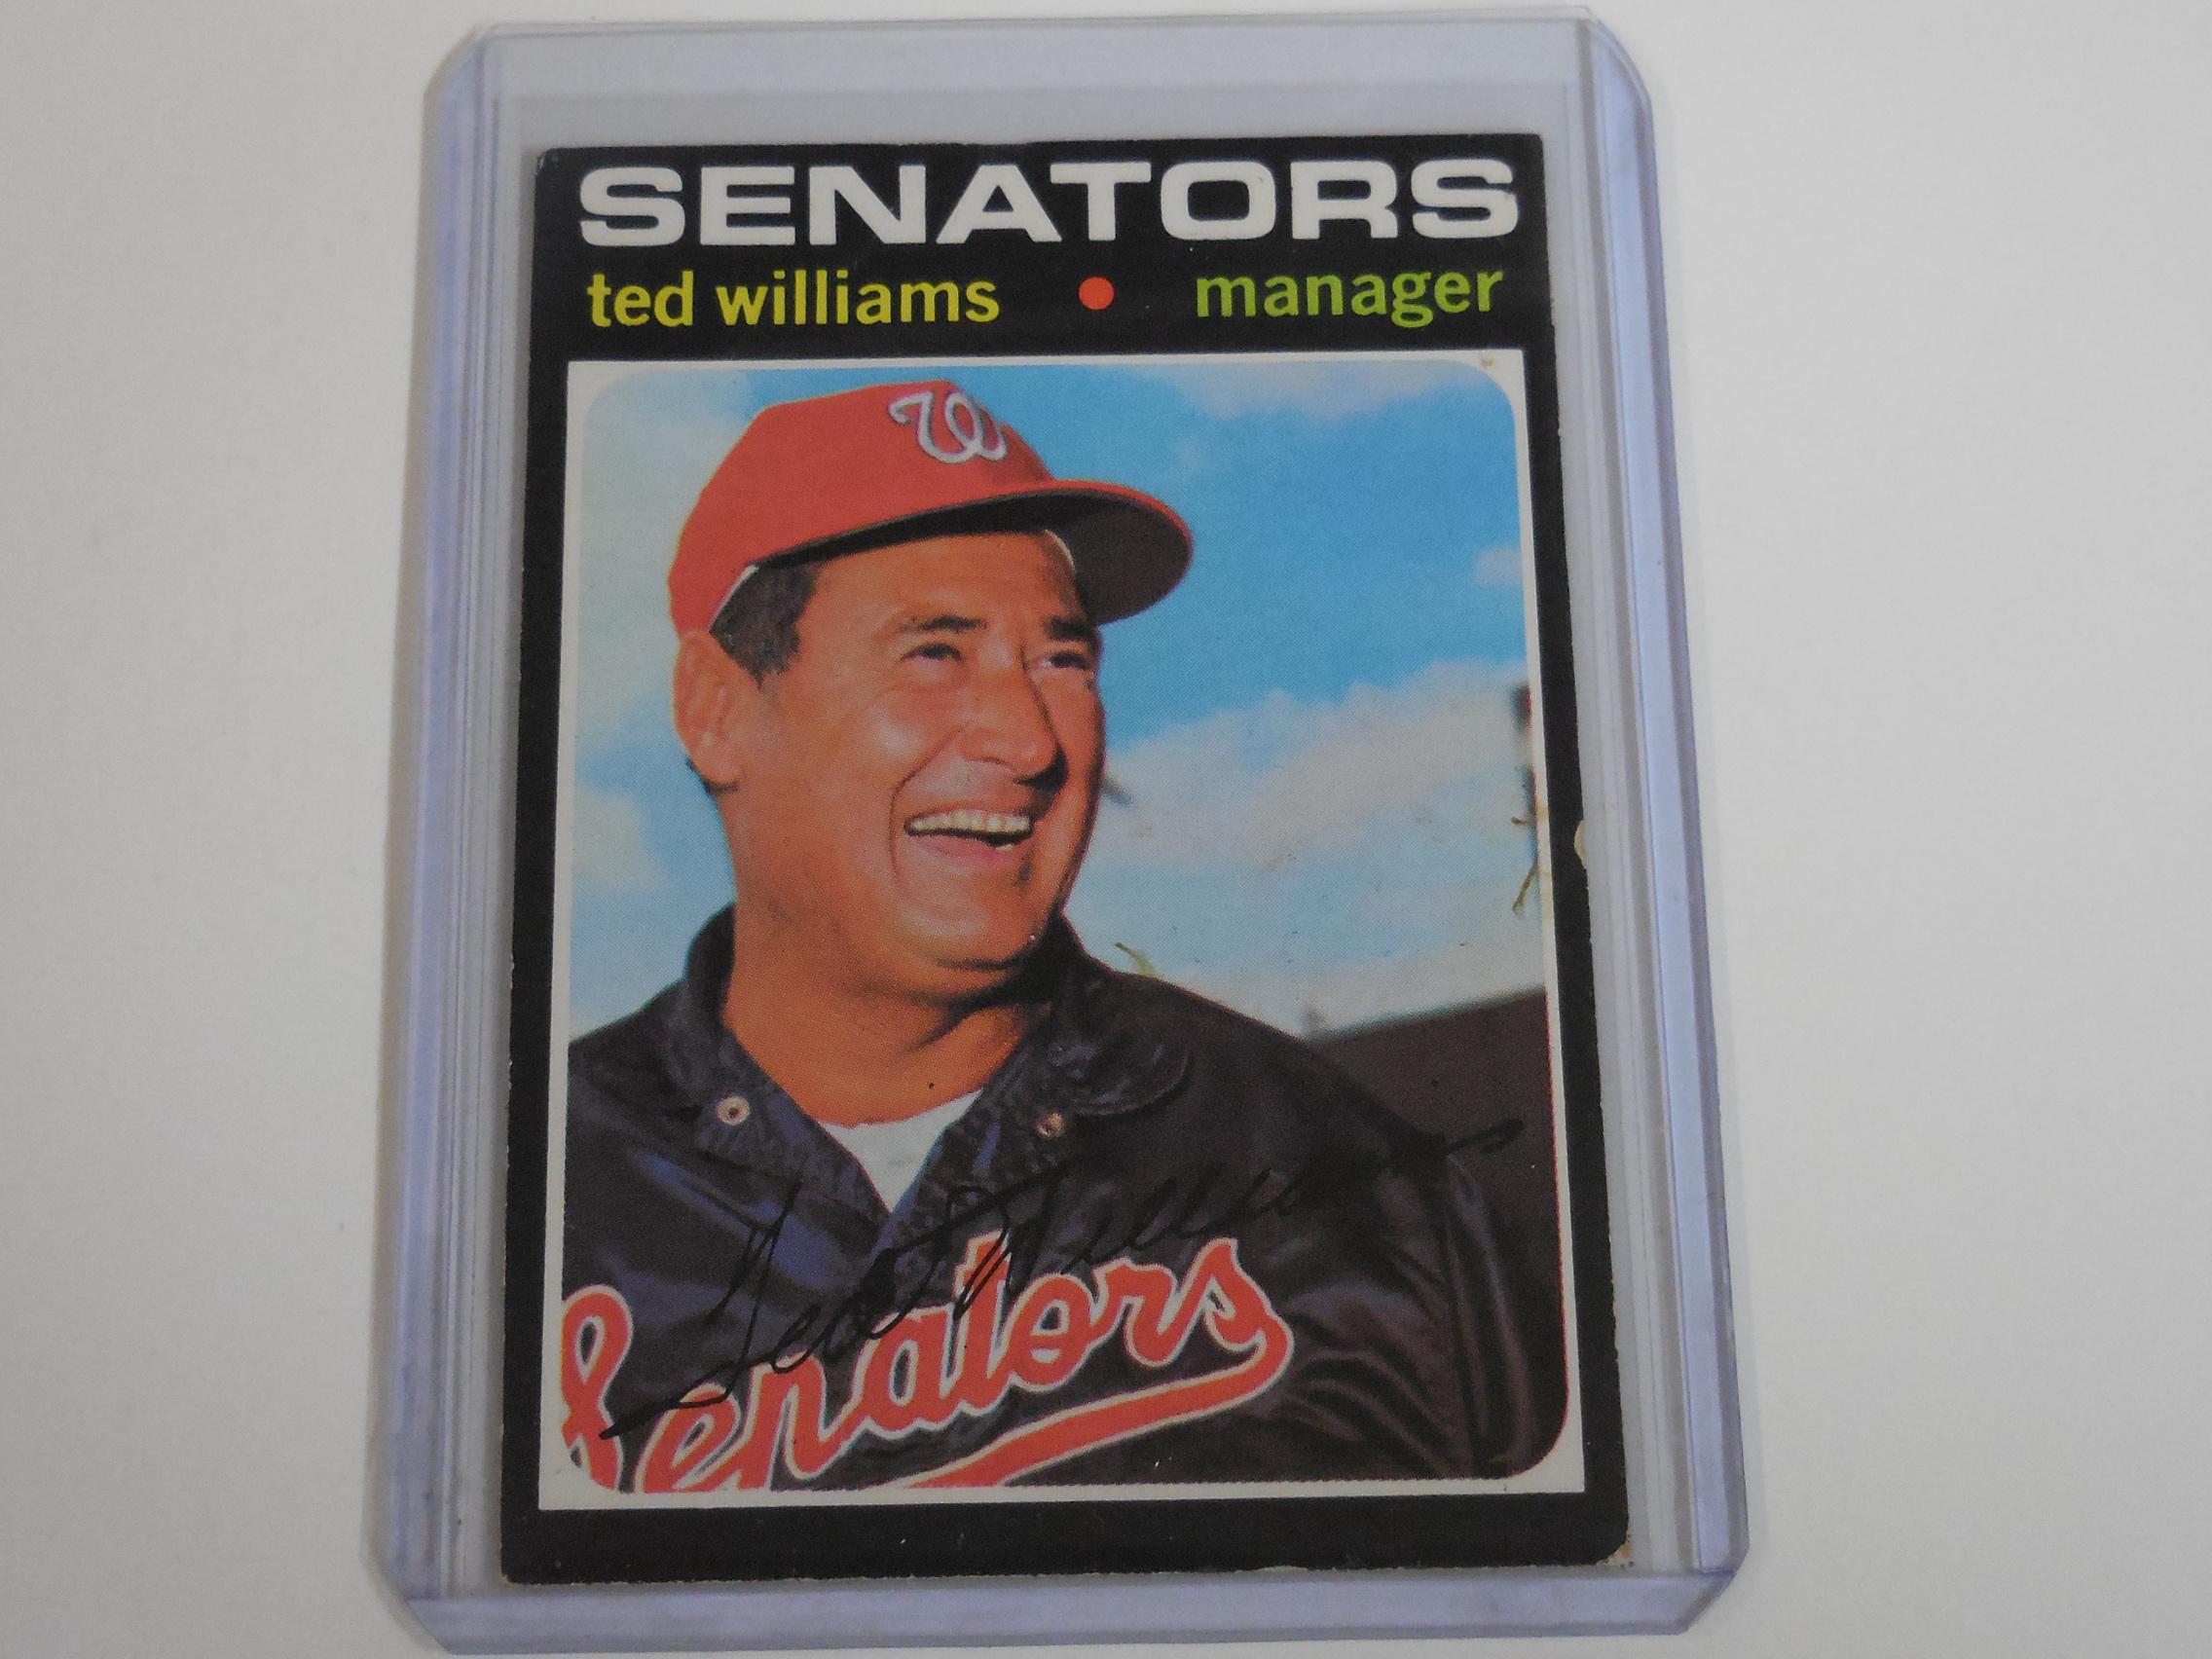 1971 TOPPS #380 TED WILLIAMS WASHINGTON SENATORS MANAGER CARD